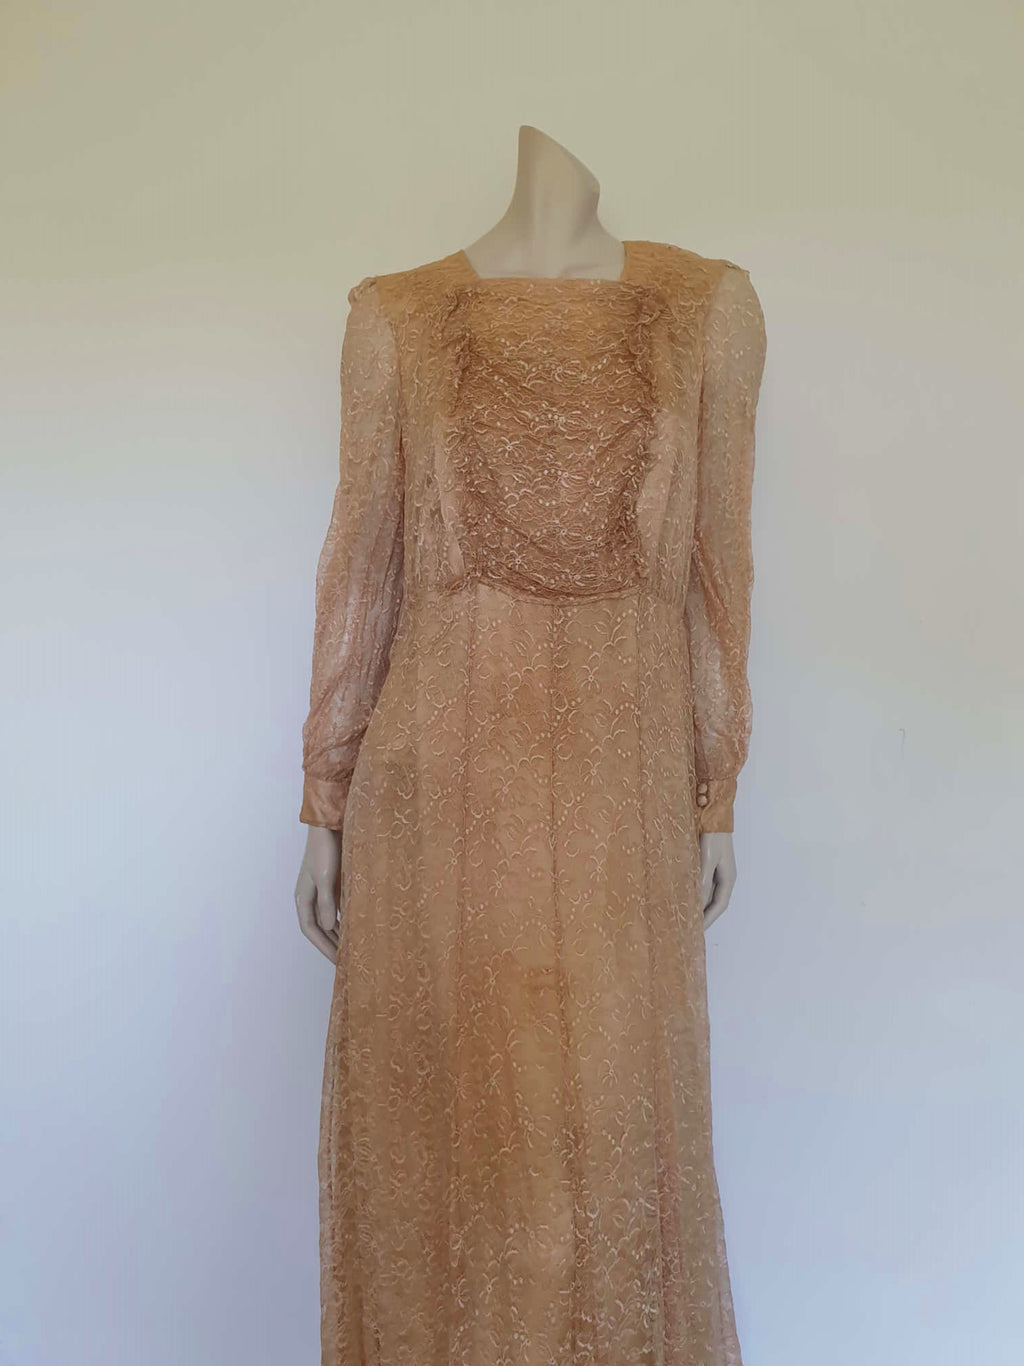 1930s vintage old gold lace dress medium